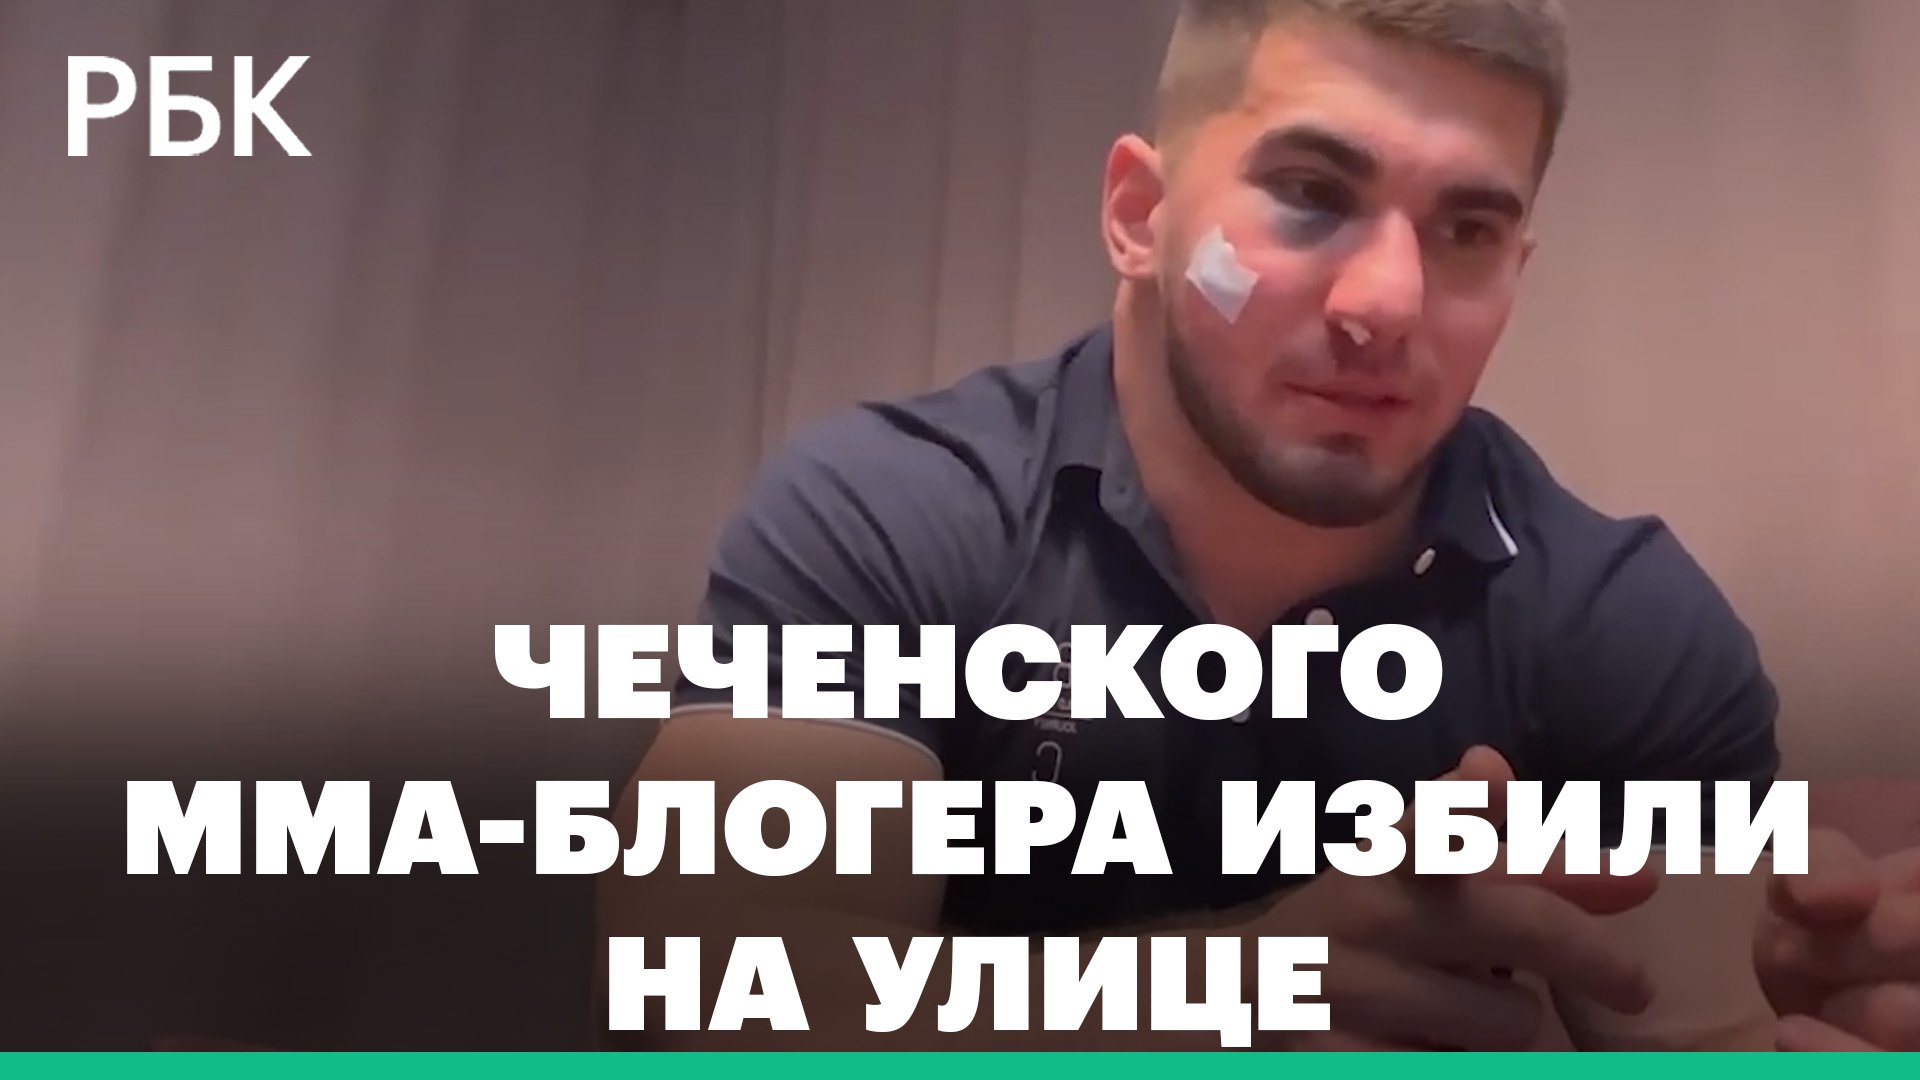 Толпа накинулась на известного ММА-блогера из Чечни. Момент избиения попал на видео